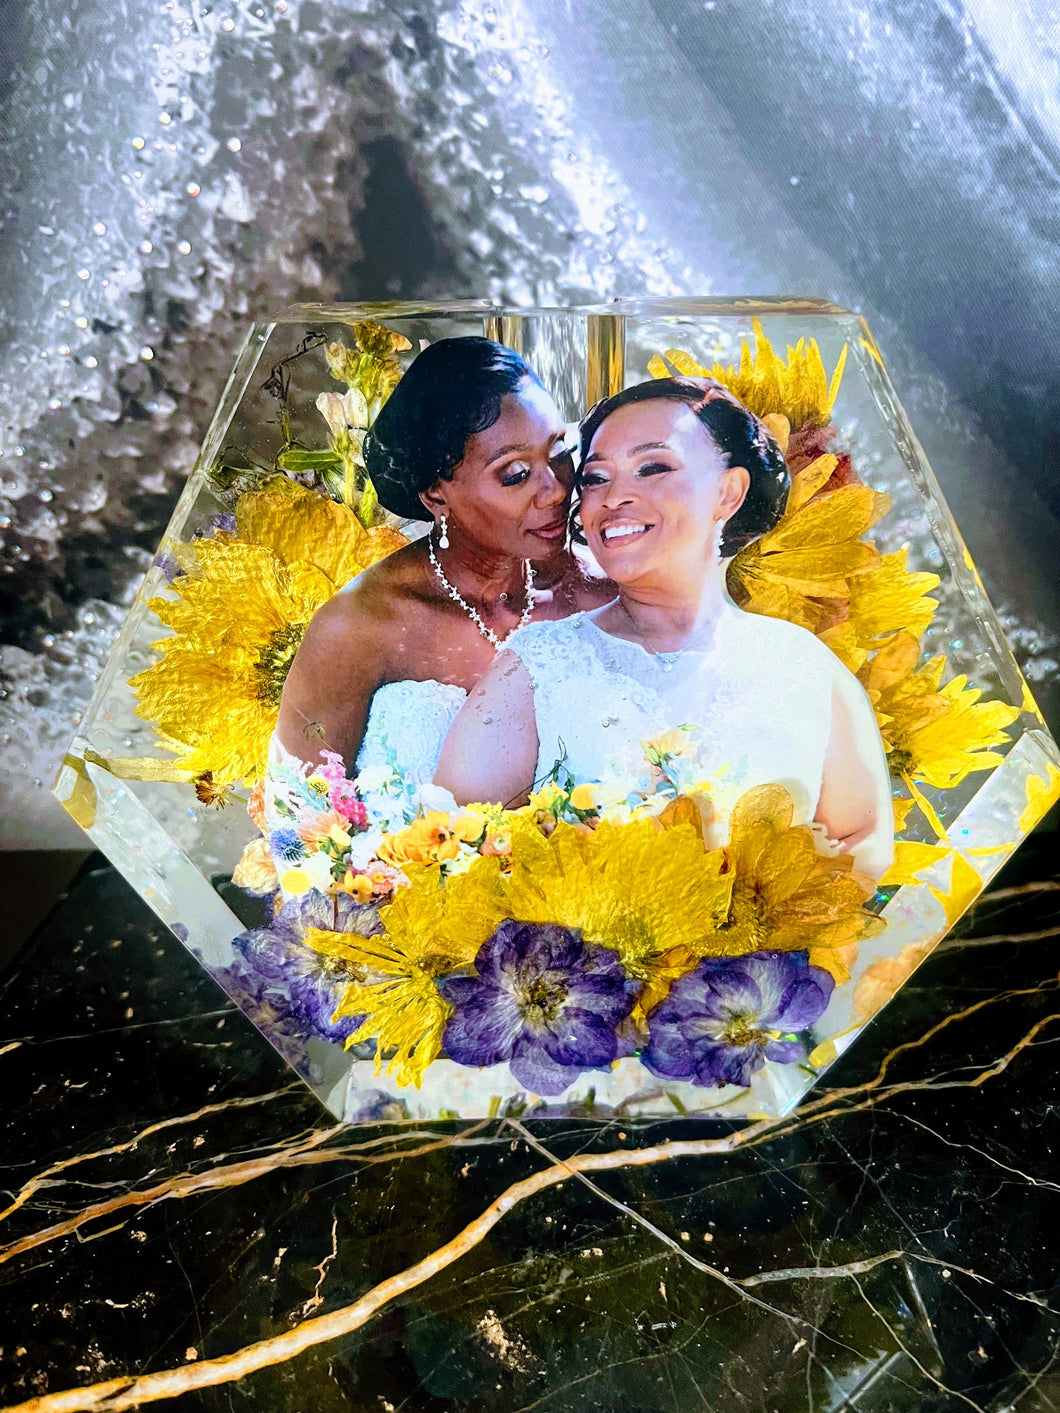 Wedding Bridal Bouquet Preservation, wedding anniversary , memorial funeral arrangement floral. Resin Block Hexagon.